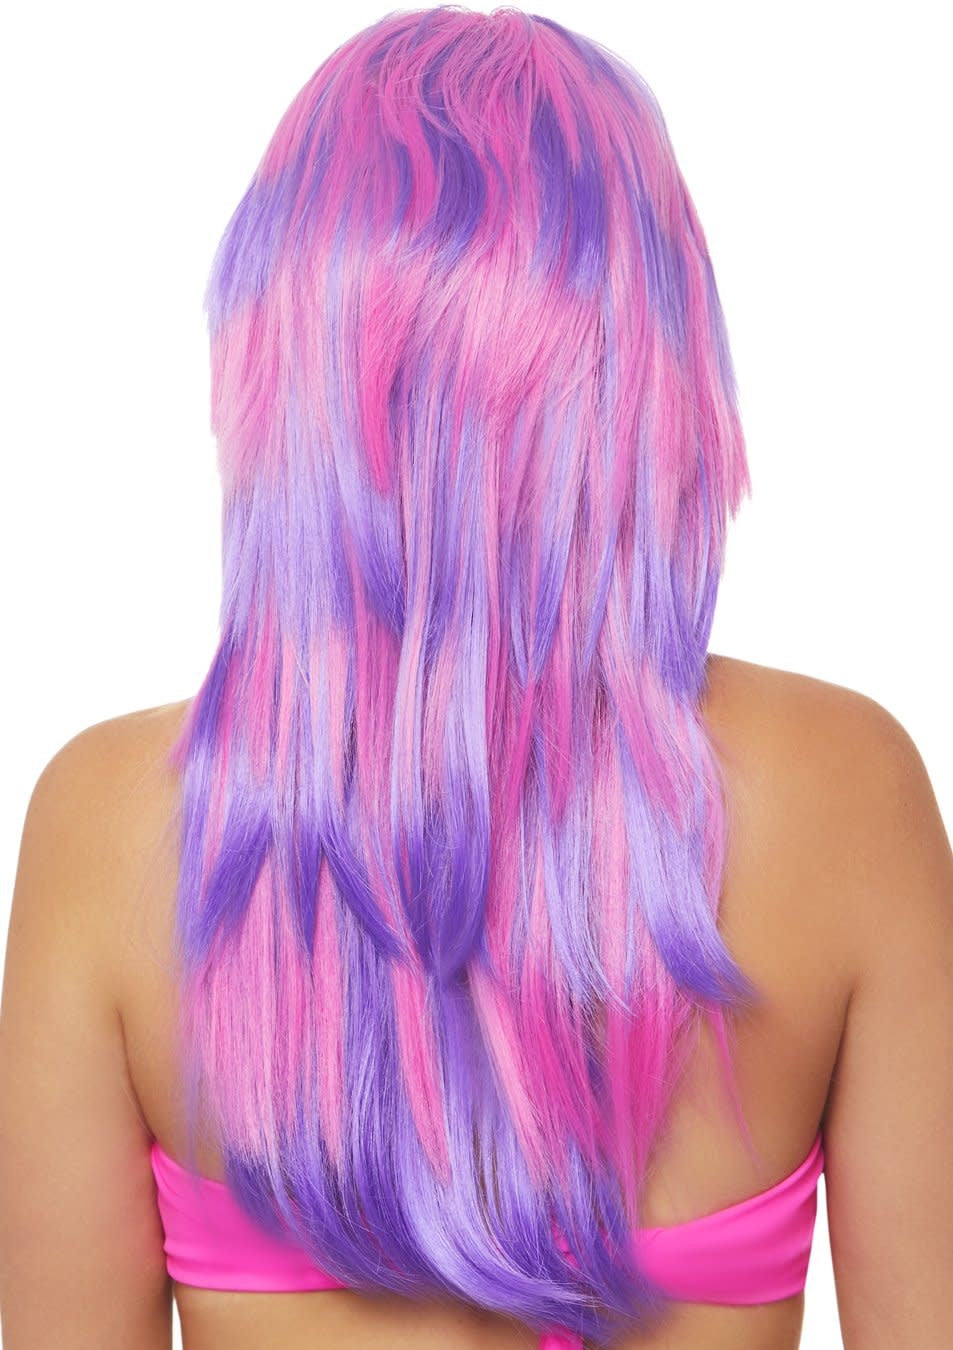 Cheshire Cat Wig - Pink/Purple